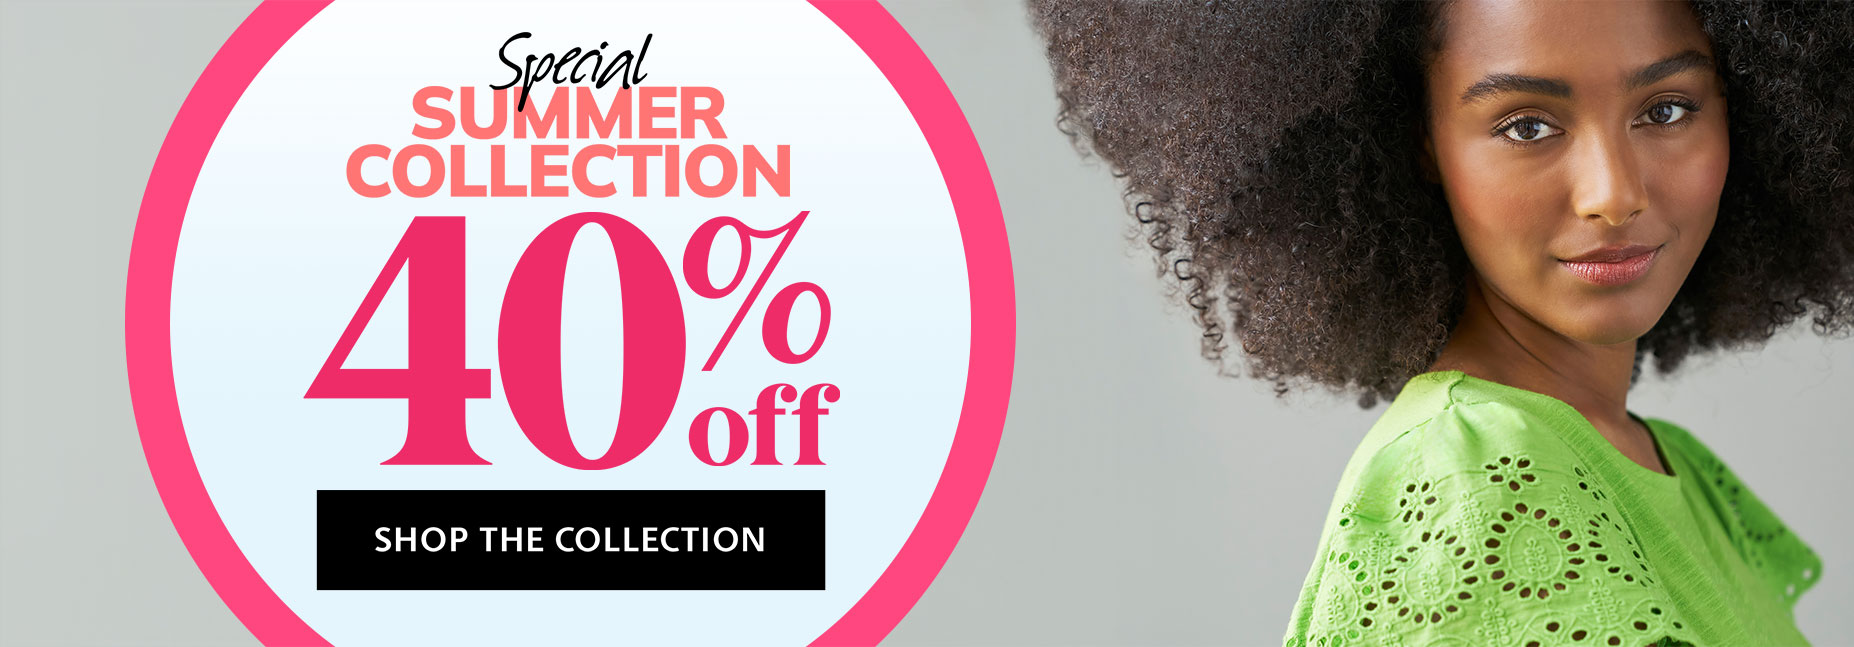 Special Summer Collection Ellos - 40% Off